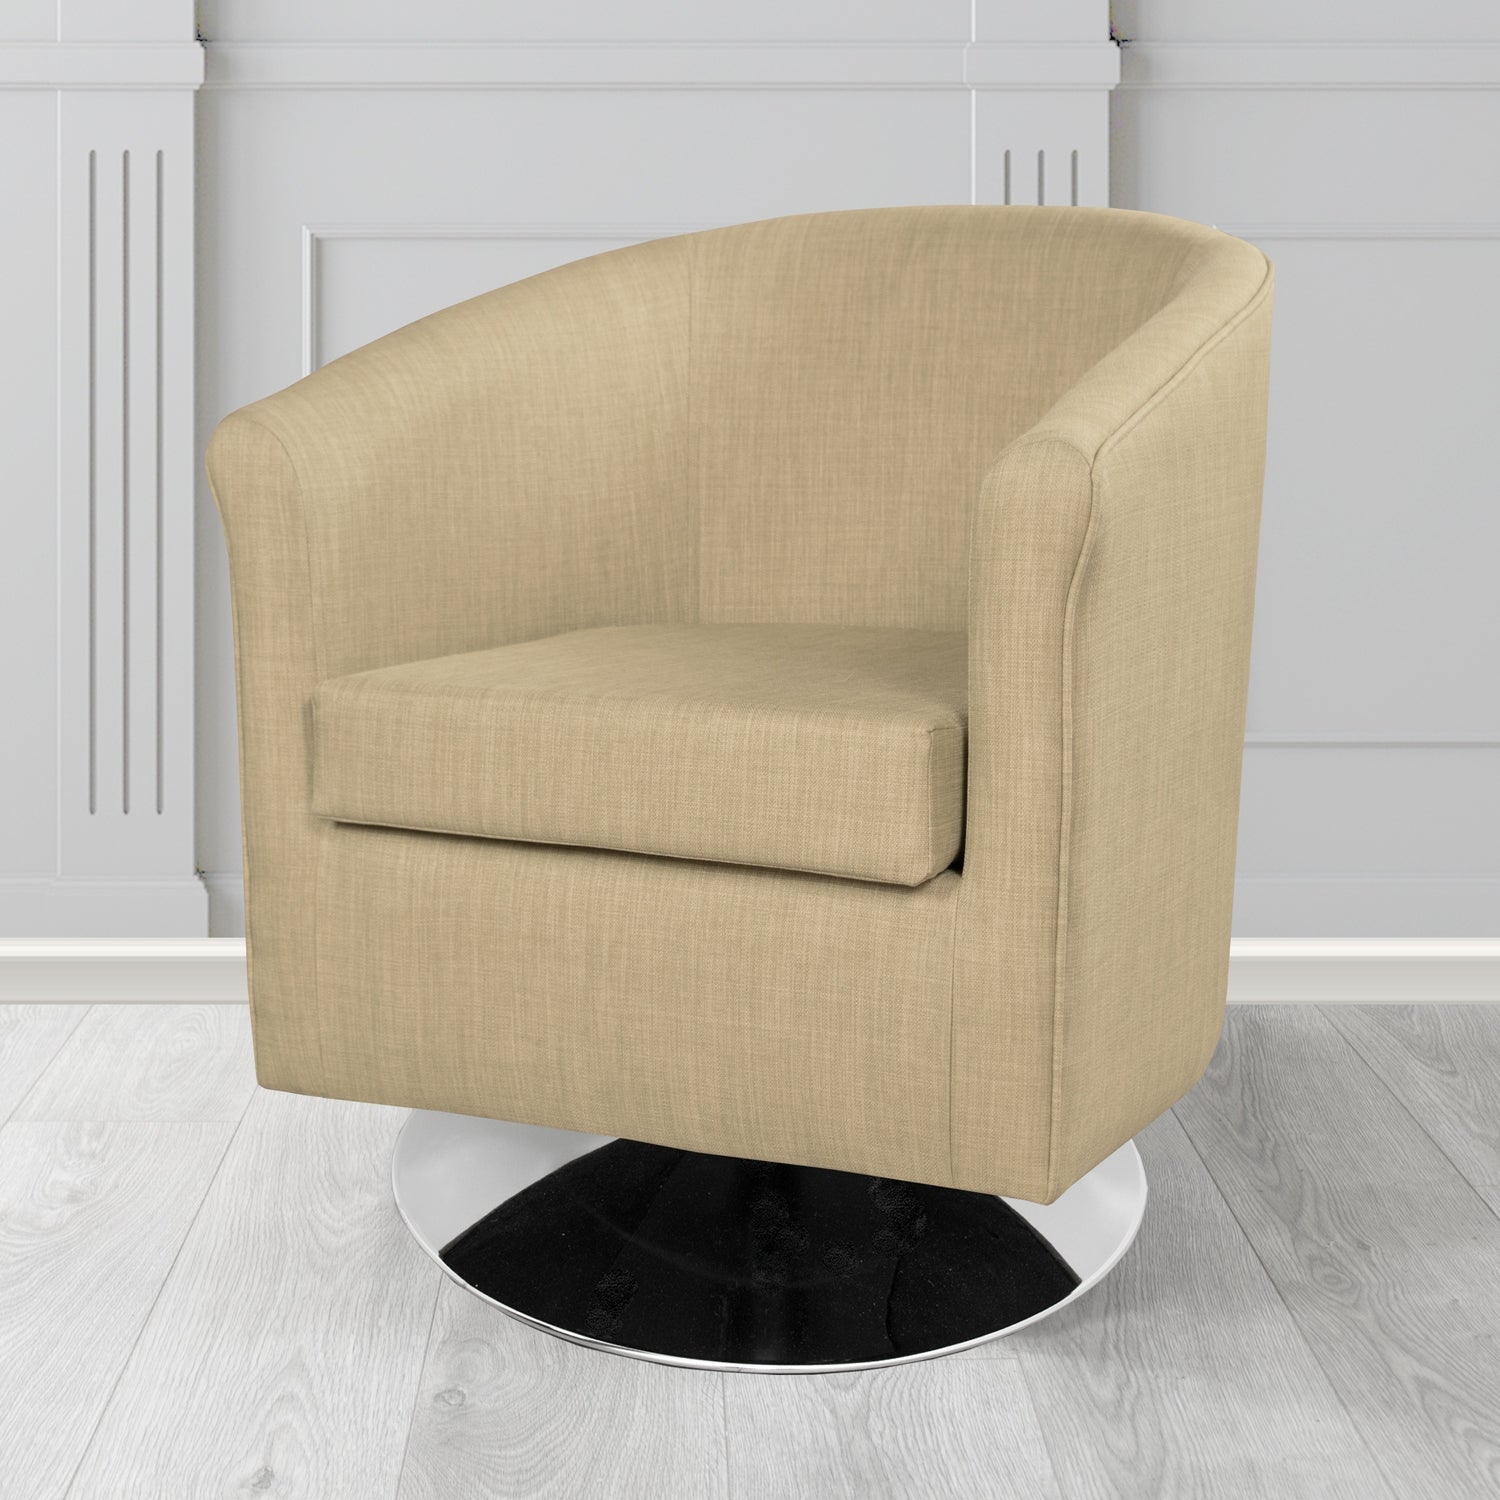 Tuscany Charles Mink Plain Linen Fabric Swivel Tub Chair - The Tub Chair Shop